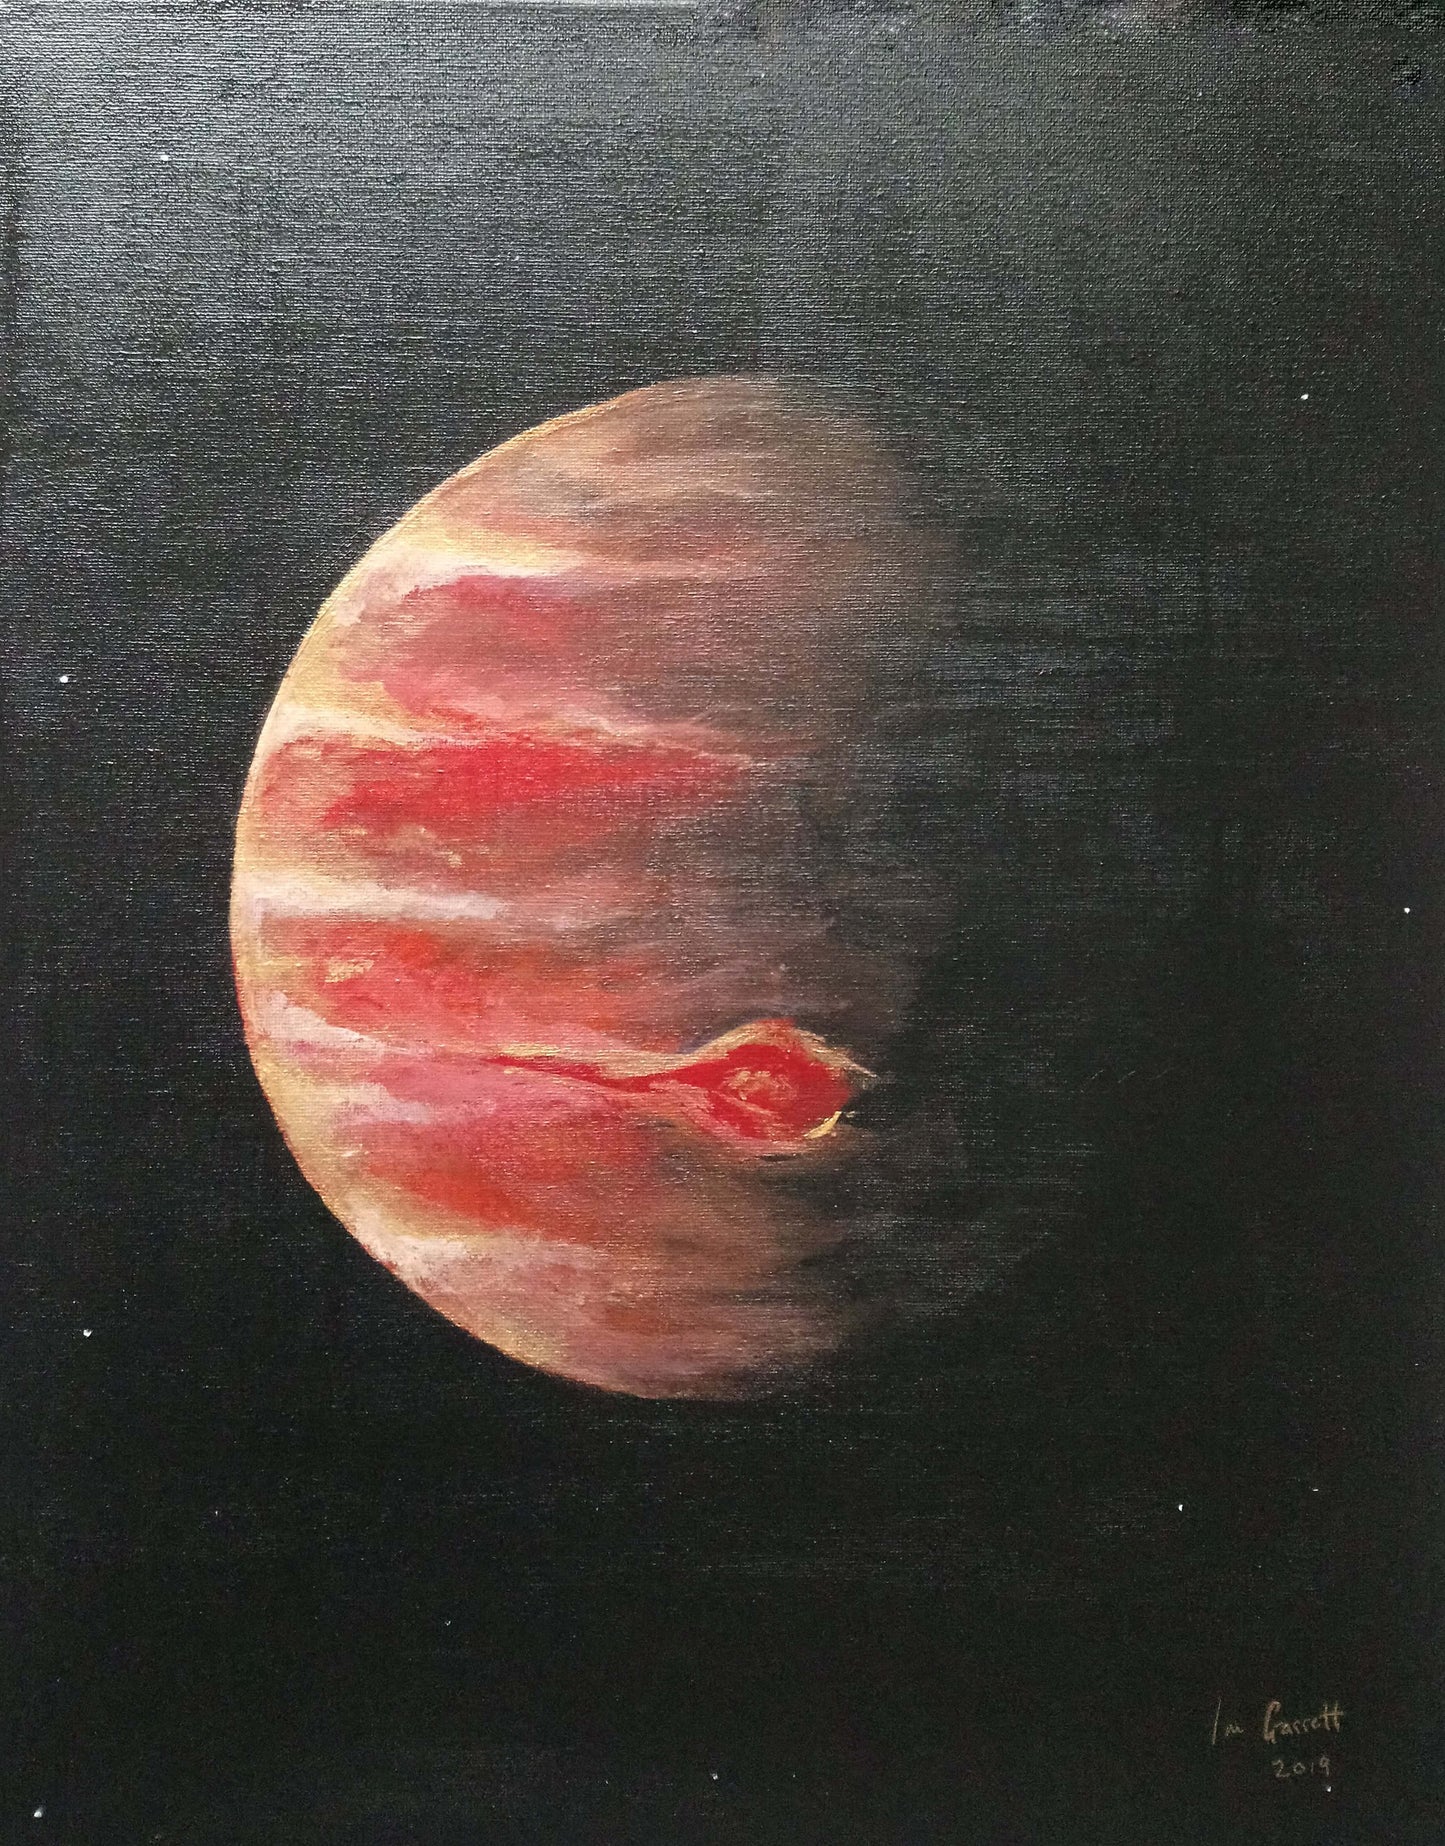 Jupiter, ©Ian Garrett 2019. Acrylic on Canvas 20 x 16 inches.